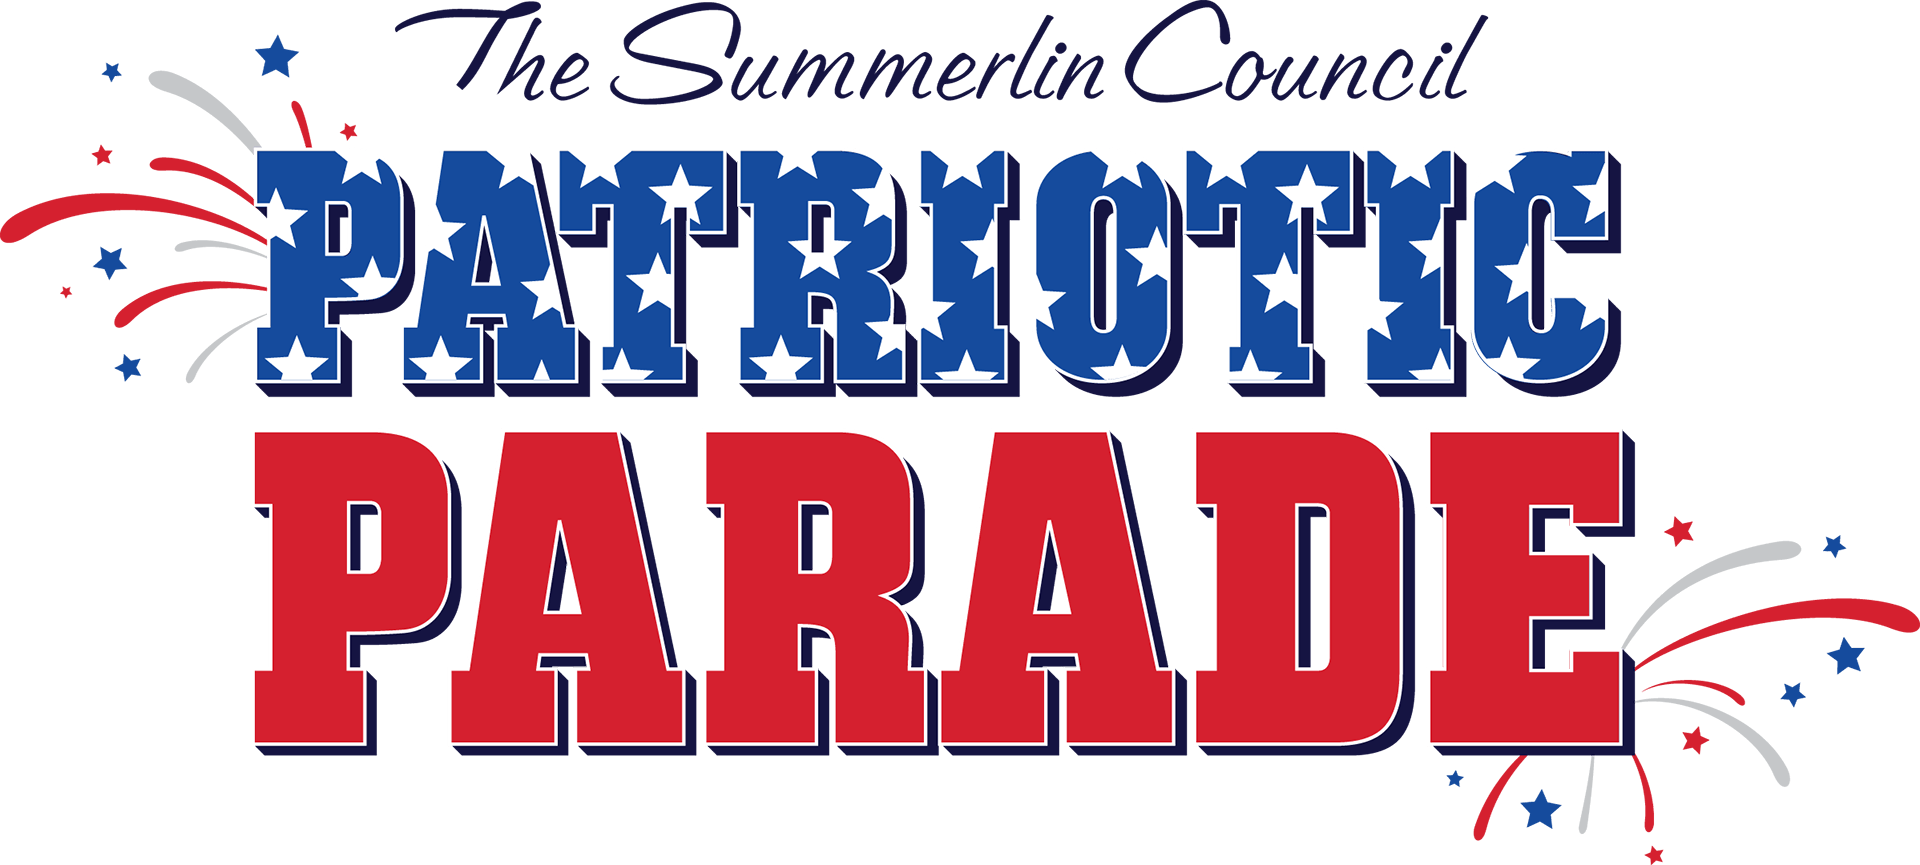 The Summerlin Council Presents the Summerlin Patriotic Parade